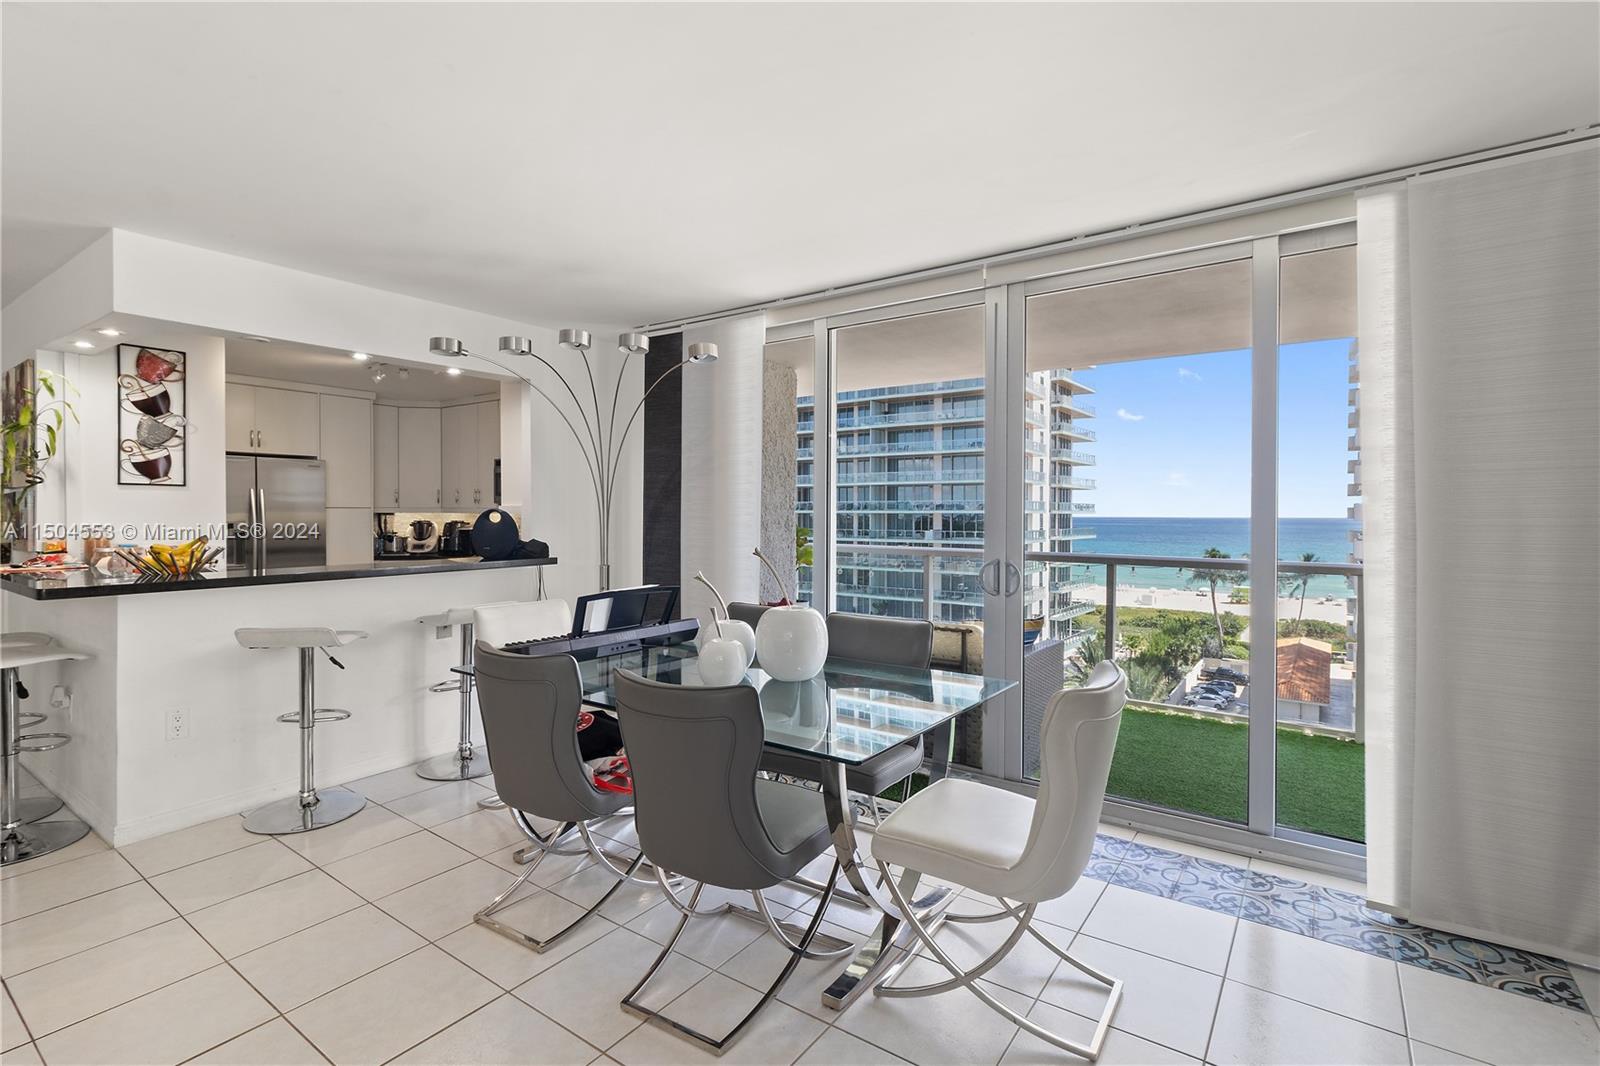 Property for Sale at 5750 Collins Ave 9A, Miami Beach, Miami-Dade County, Florida - Bedrooms: 2 
Bathrooms: 2  - $699,900